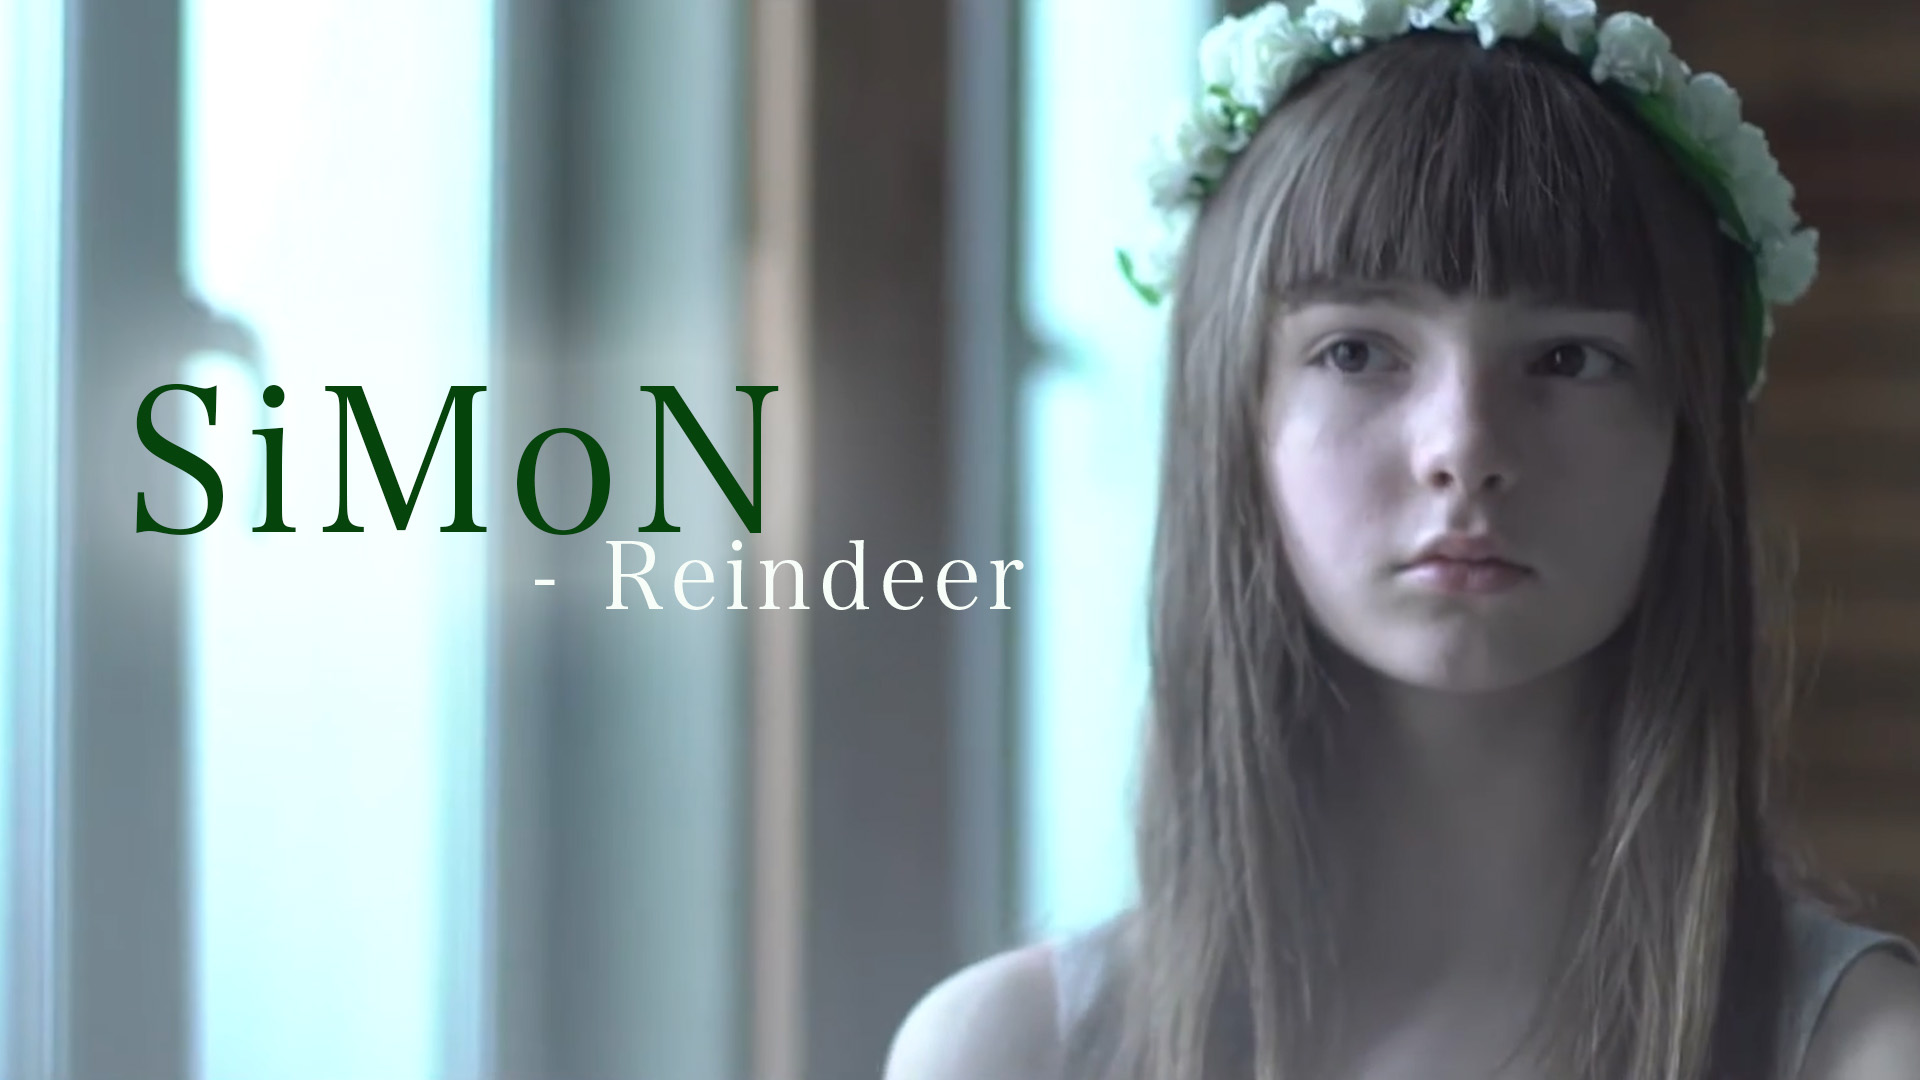 SiMoN - Reindeer (Official Music Video)